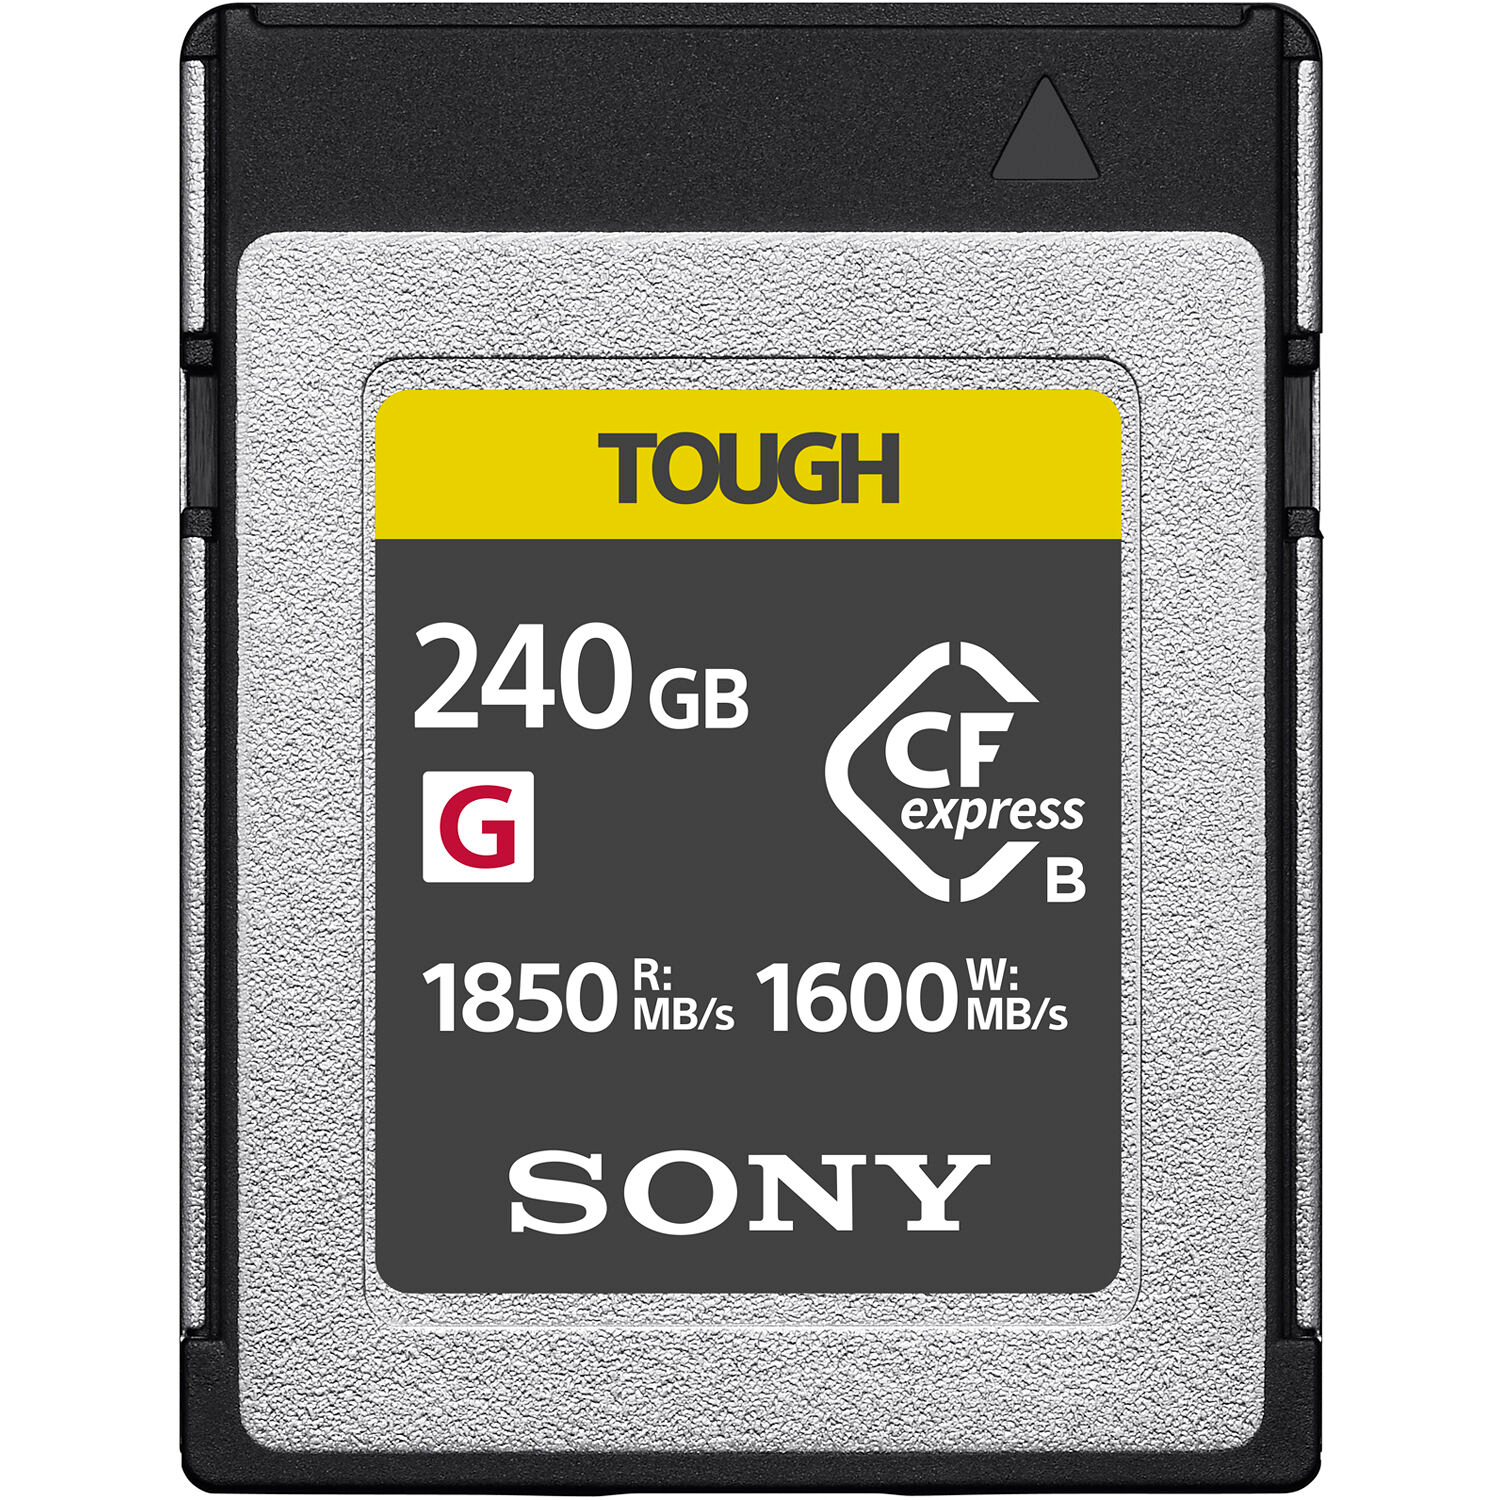 Карта памяти Sony CFexpress Type B 240GB R1850/W1600MB/s Tough (CEBG240T.CE7) фото 1